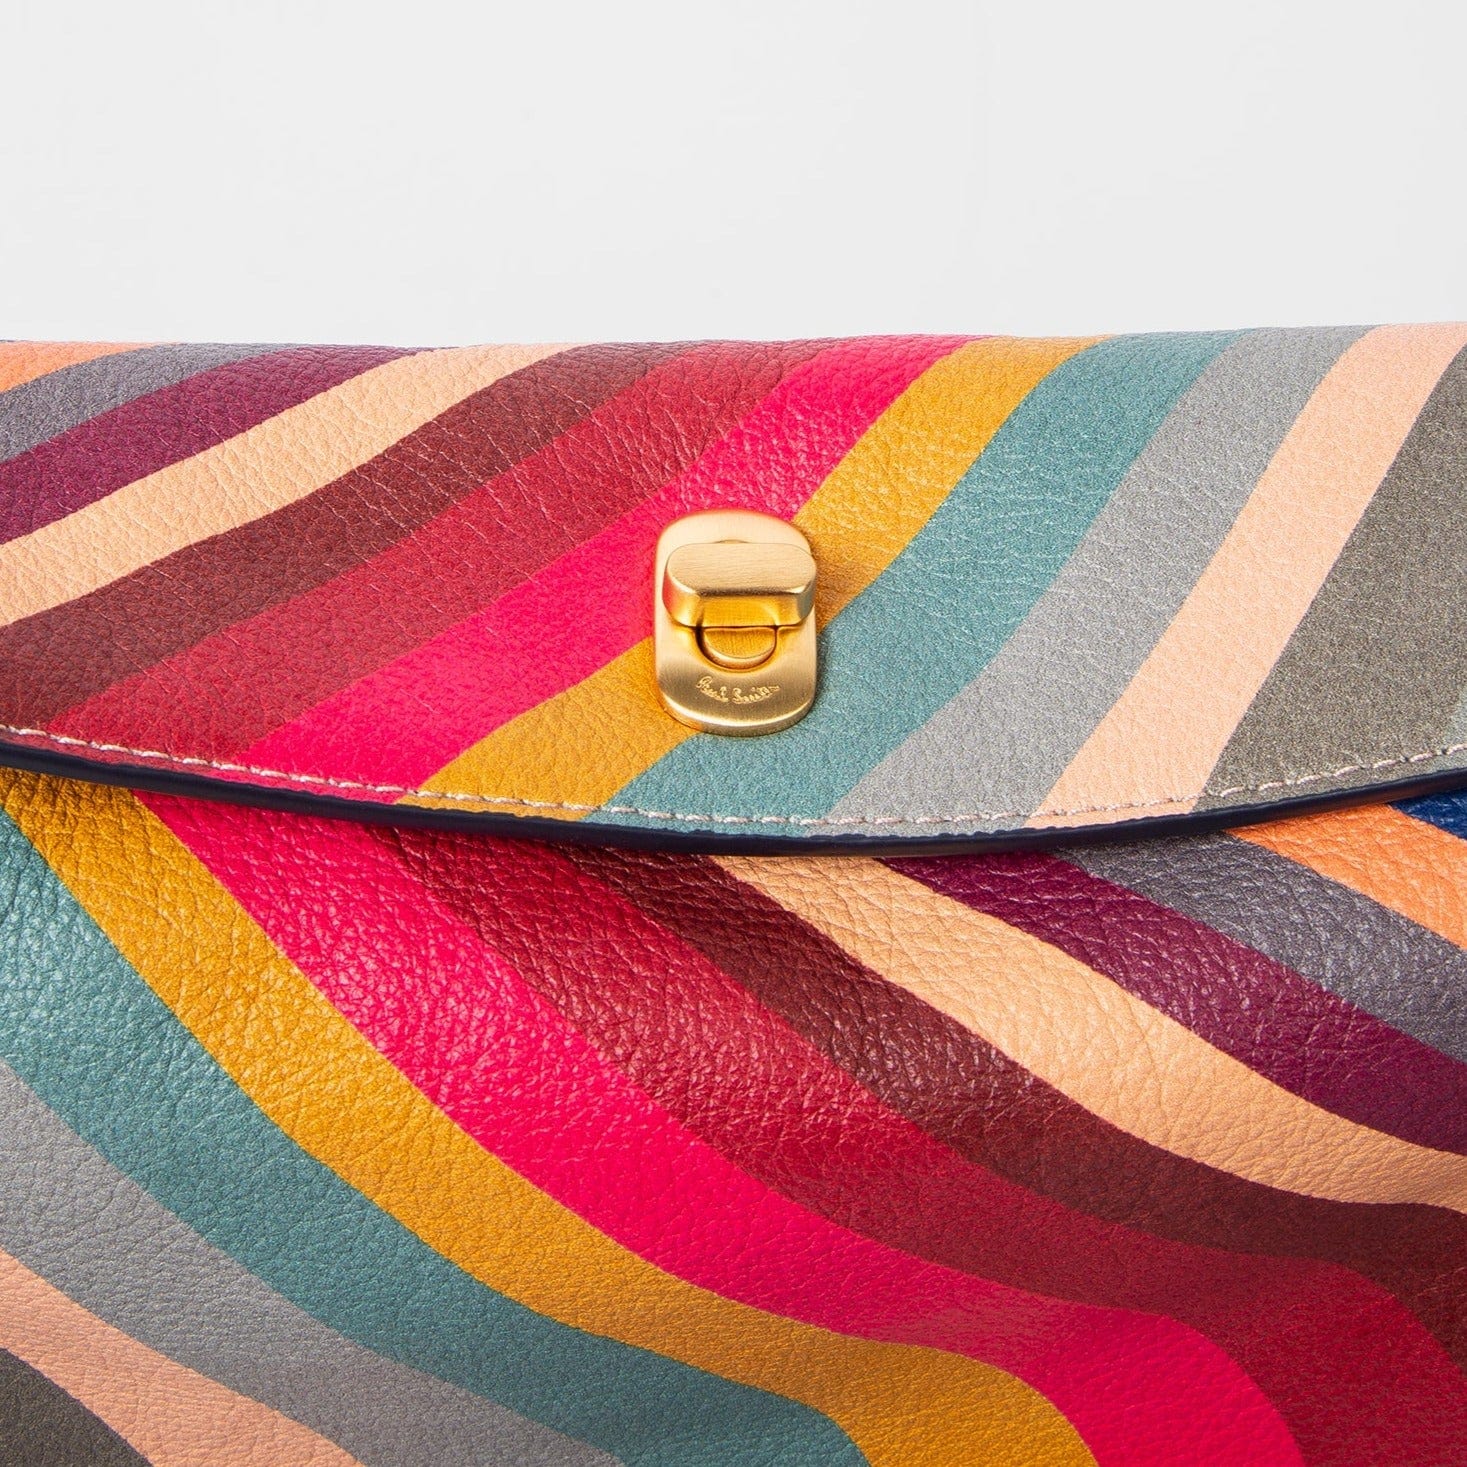 Paul Smith 'Swirl' Shoulder Bag in Multicolour 90